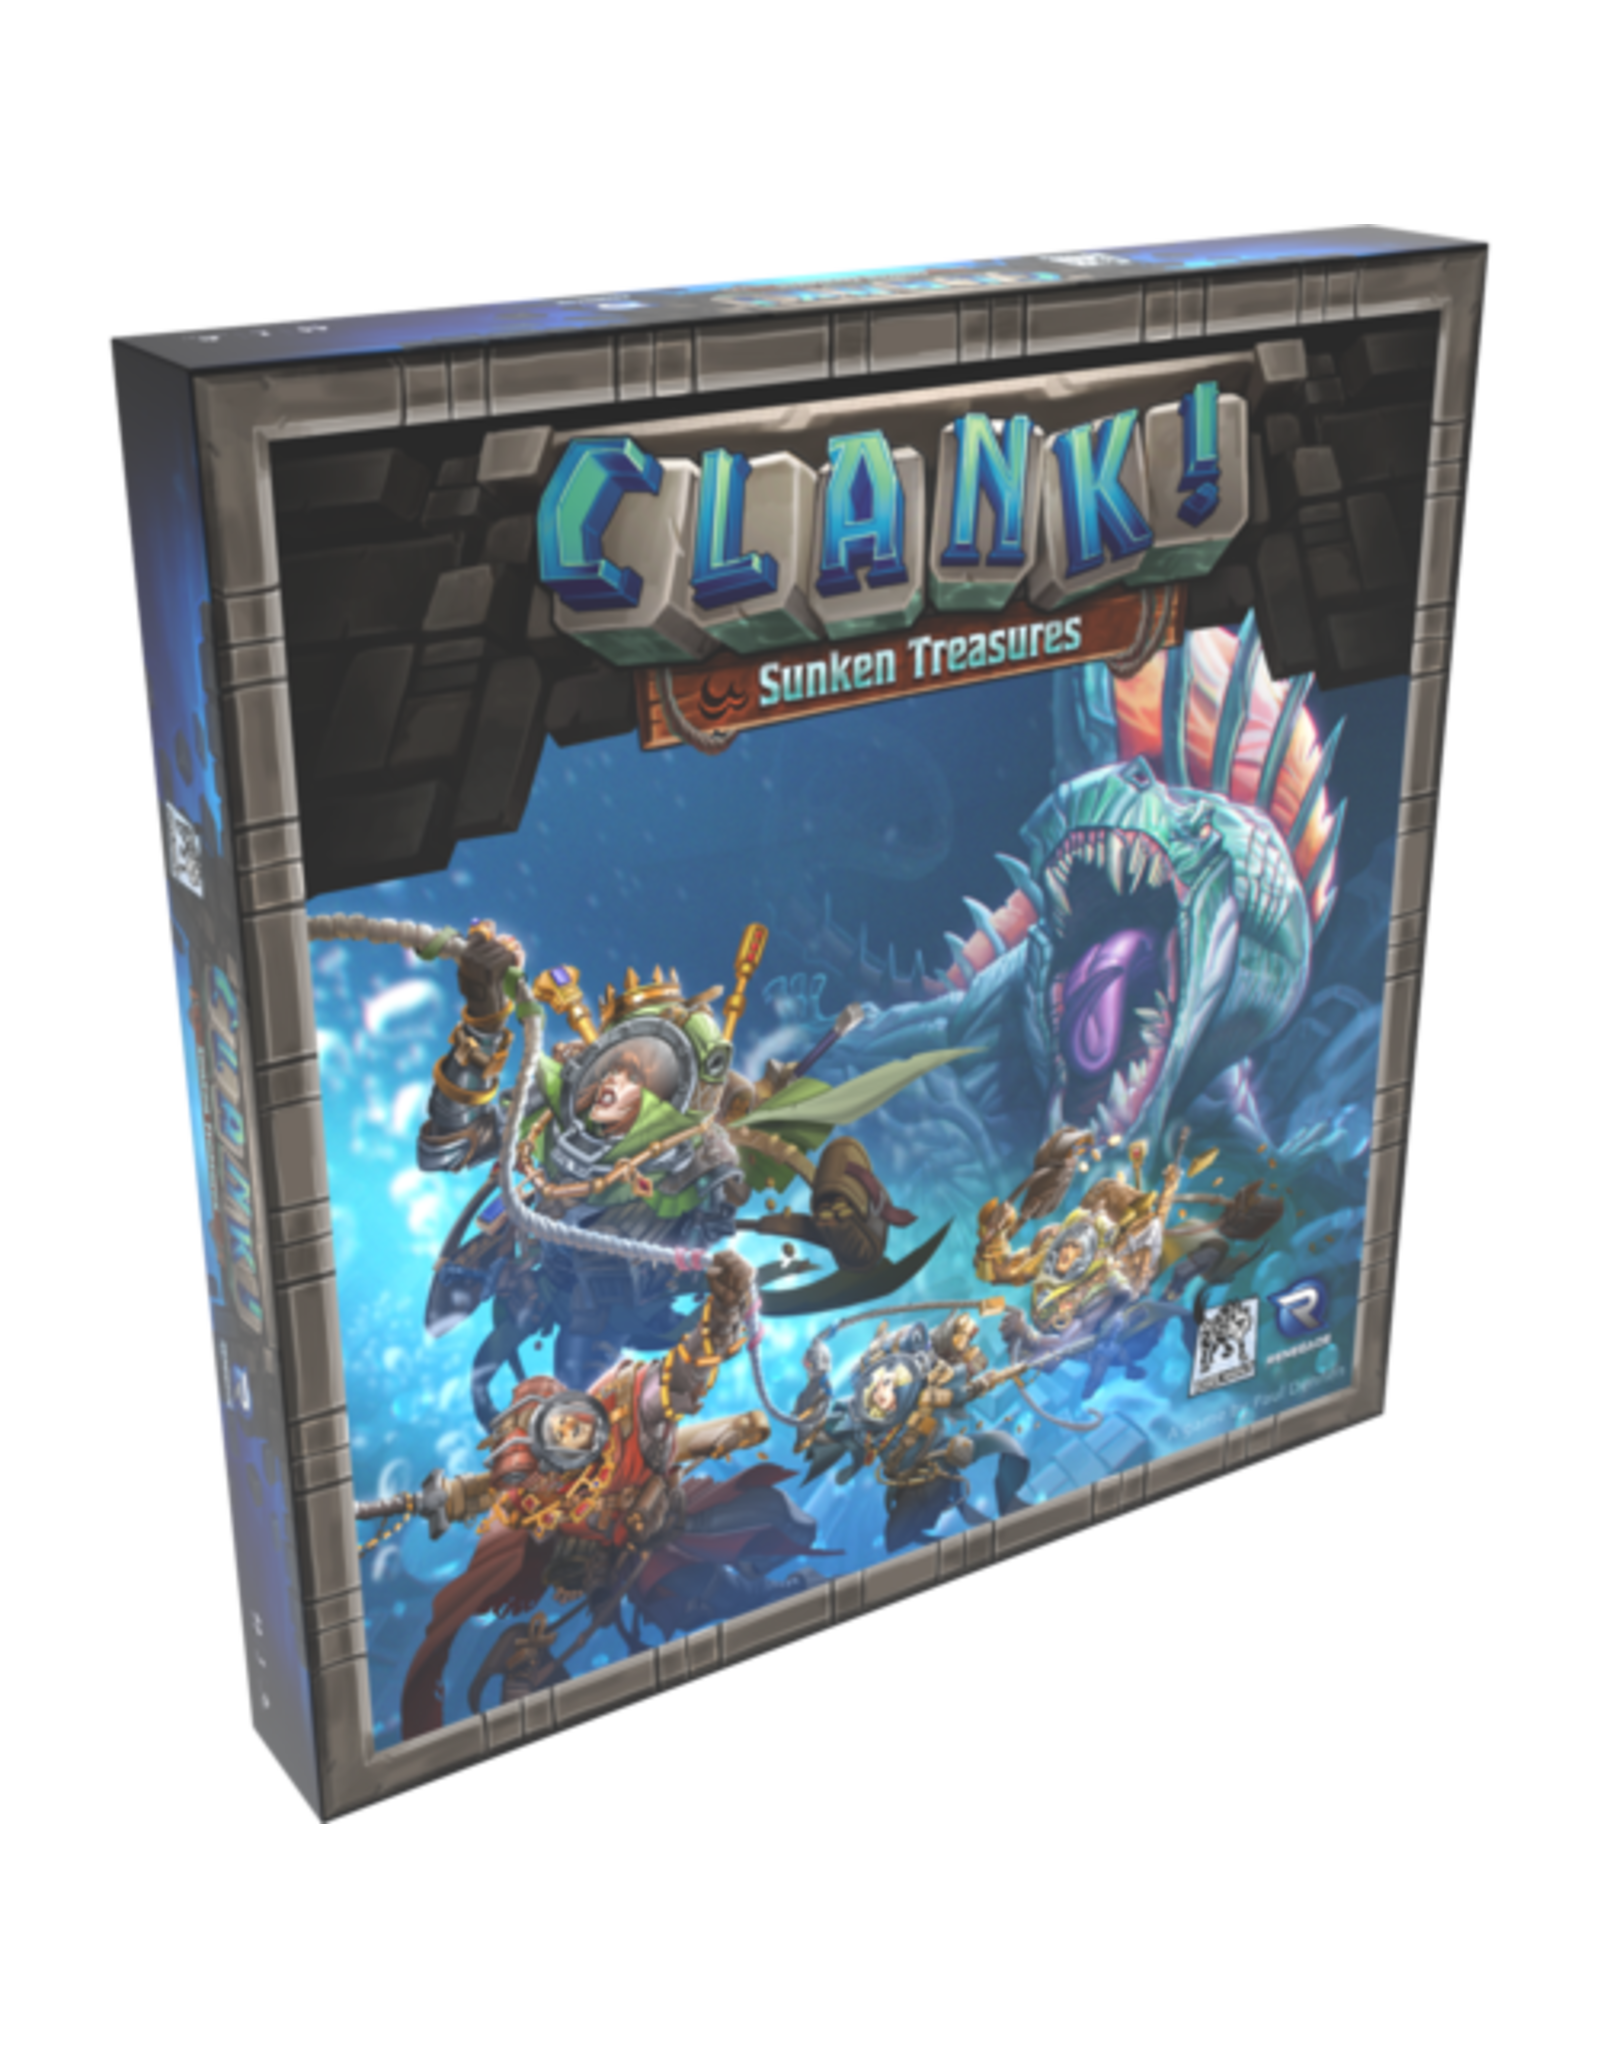 Direwolf Clank!: Sunken Treasures